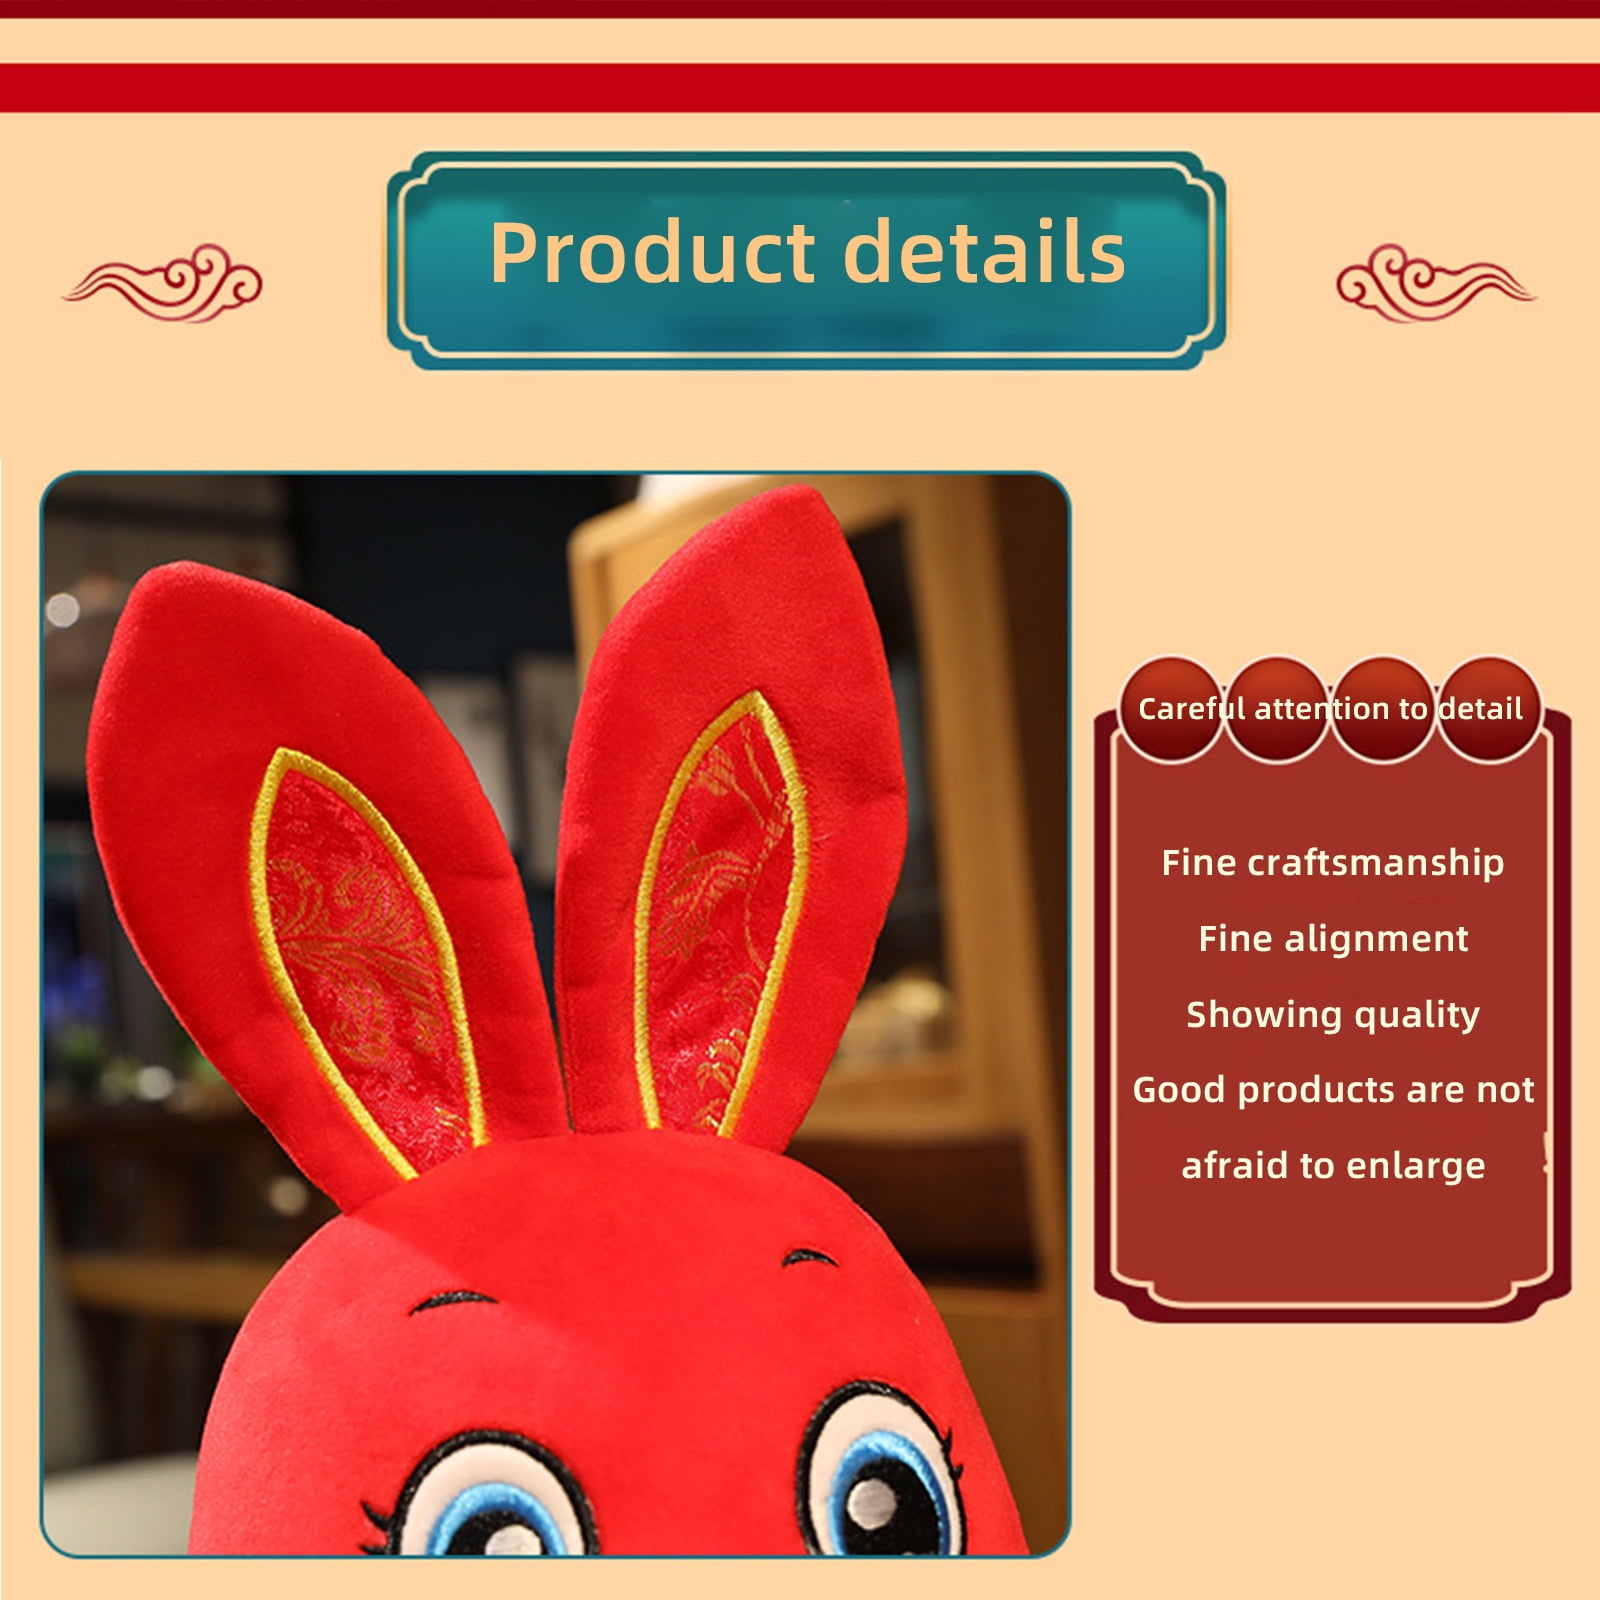 LV MCM DIOR New Cute Diamond Inlaid Leather Rabbit Plush Toys 38cm Bunny  DIY Doll Ornament Creative Gifts Accompany Birthday Toys CLEARANCE‼️